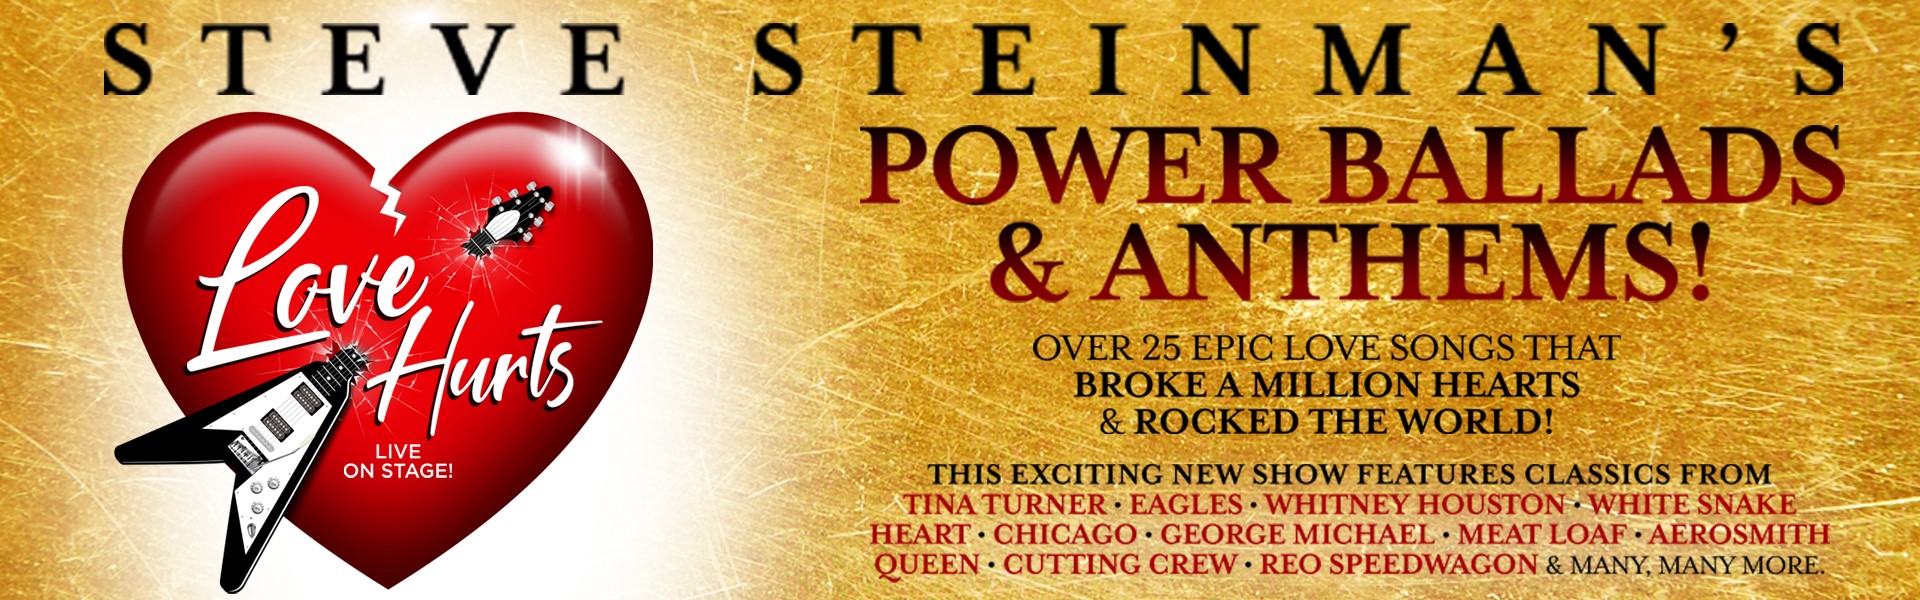 Love Hurts - Power ballads & anthems | A Steve Steinman Productions Ltd